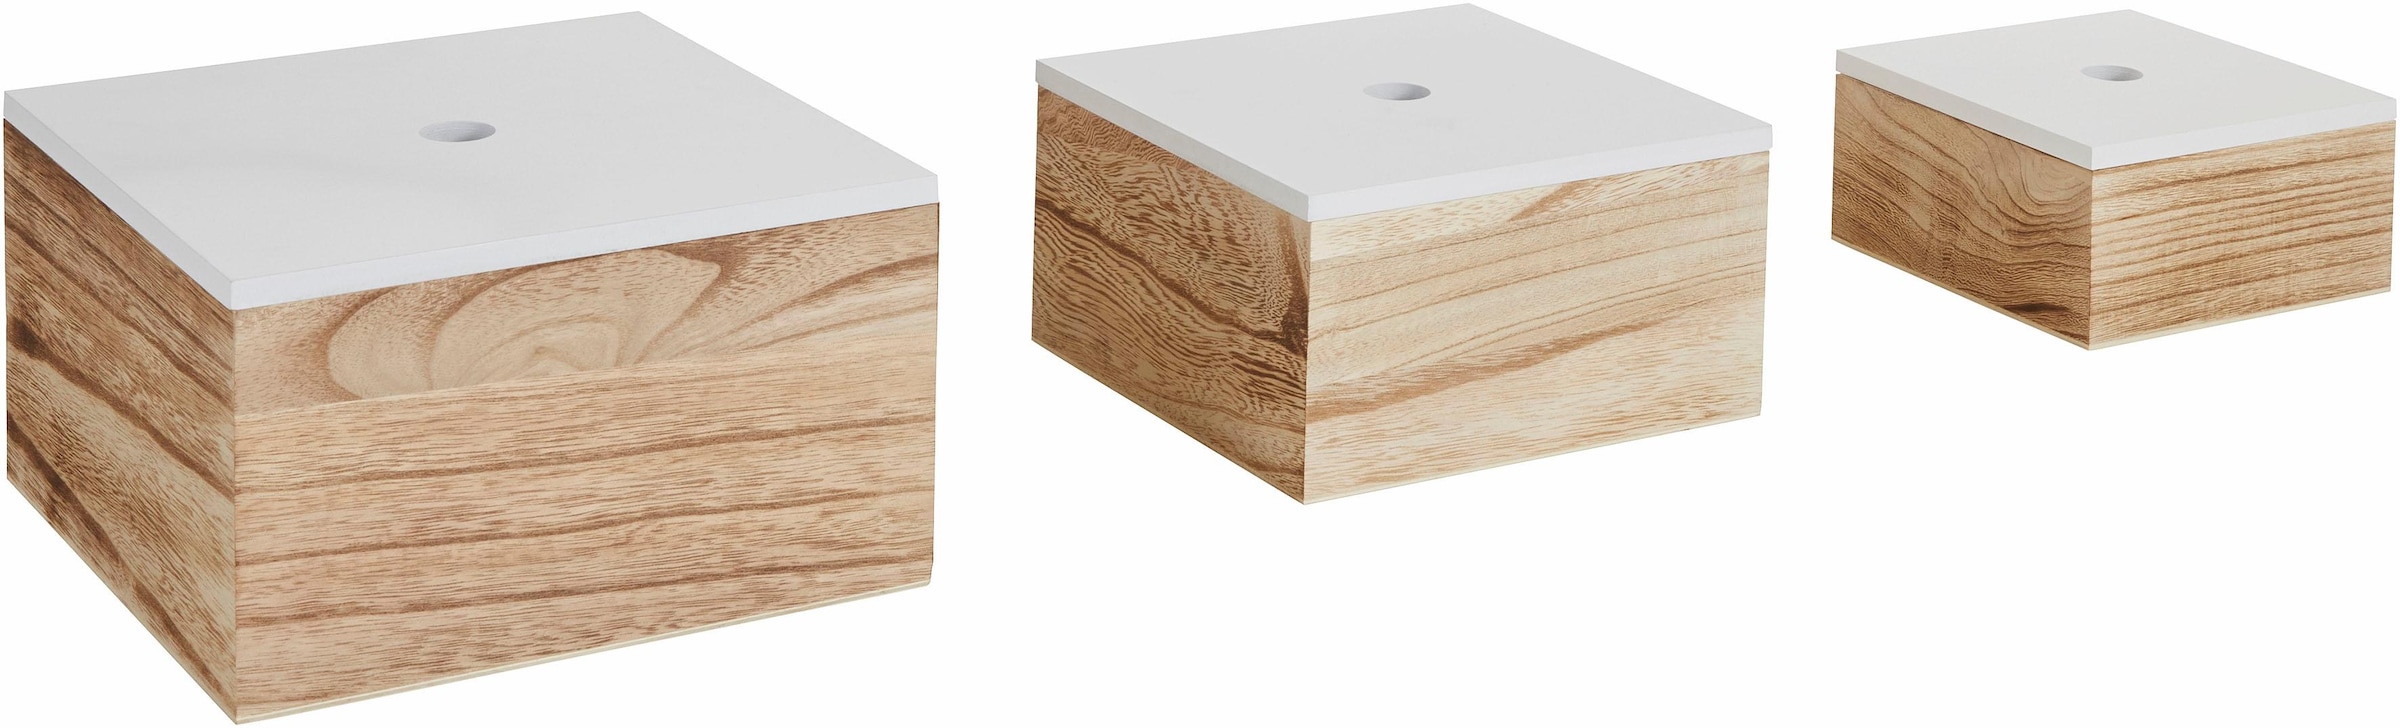 Zeller Present Aufbewahrungsbox, 3er Set, Holz, weiß/natur online bestellen